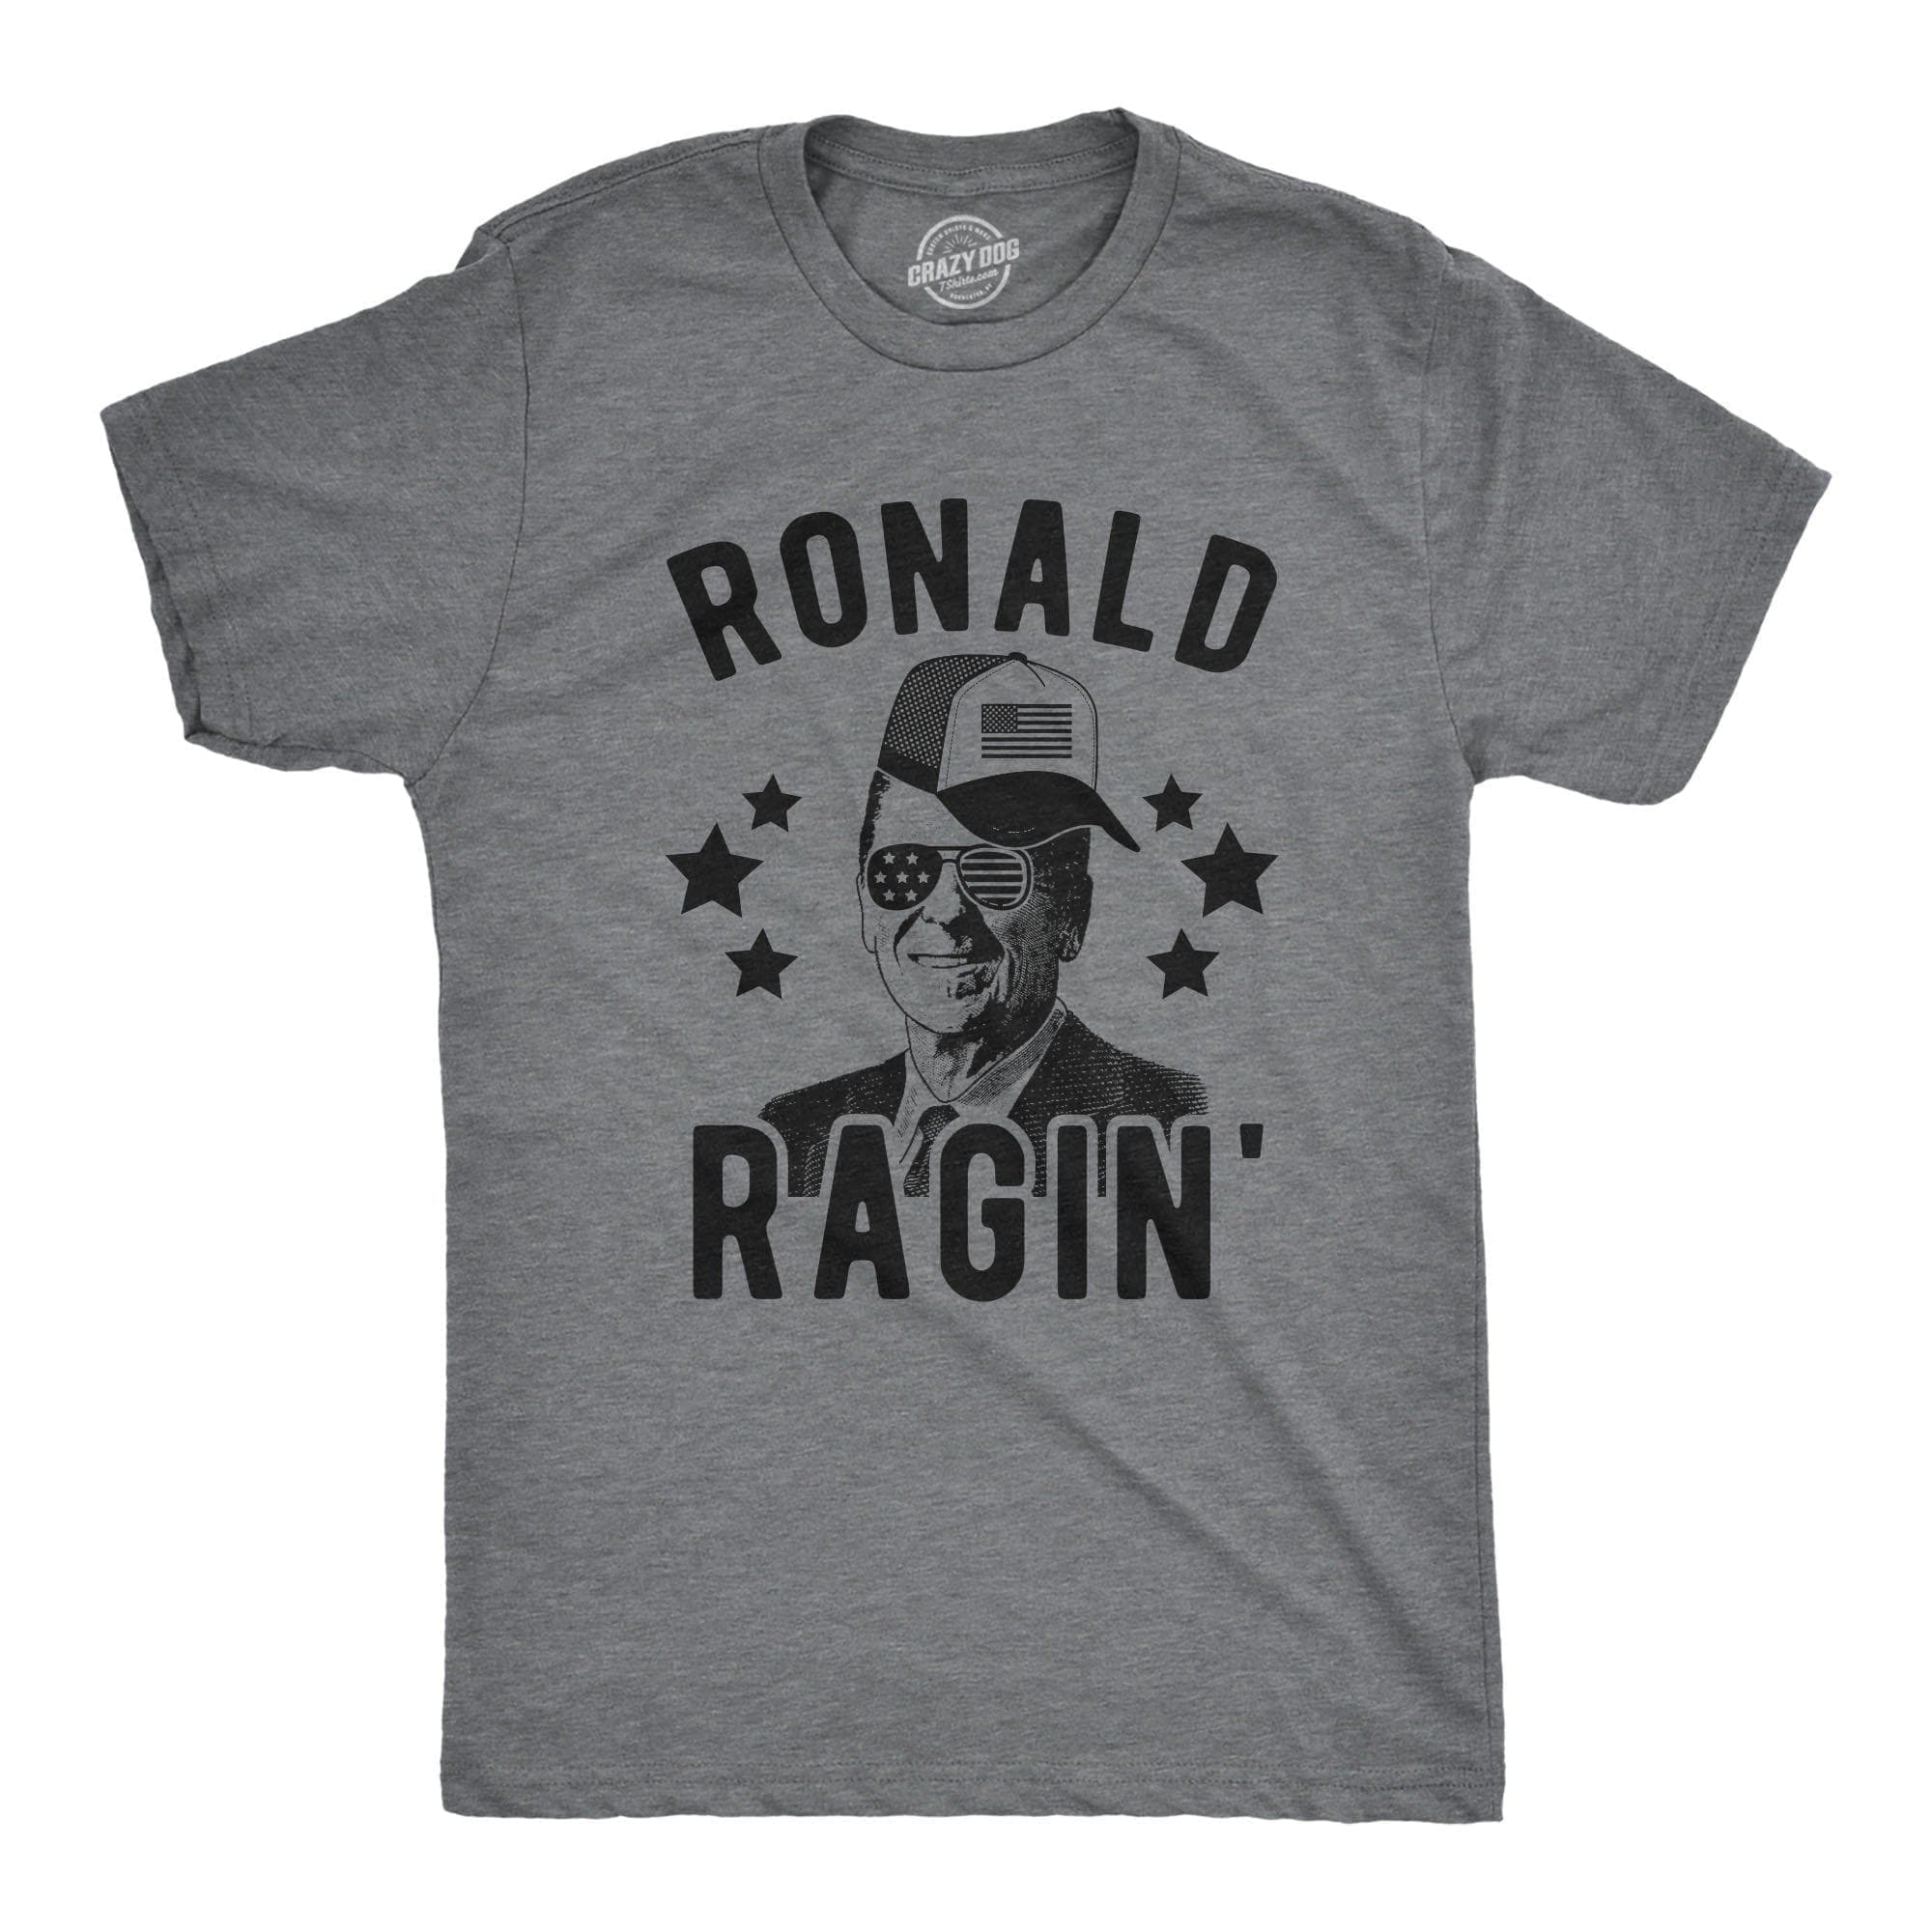 Ronald Ragin' Men's Tshirt - Crazy Dog T-Shirts